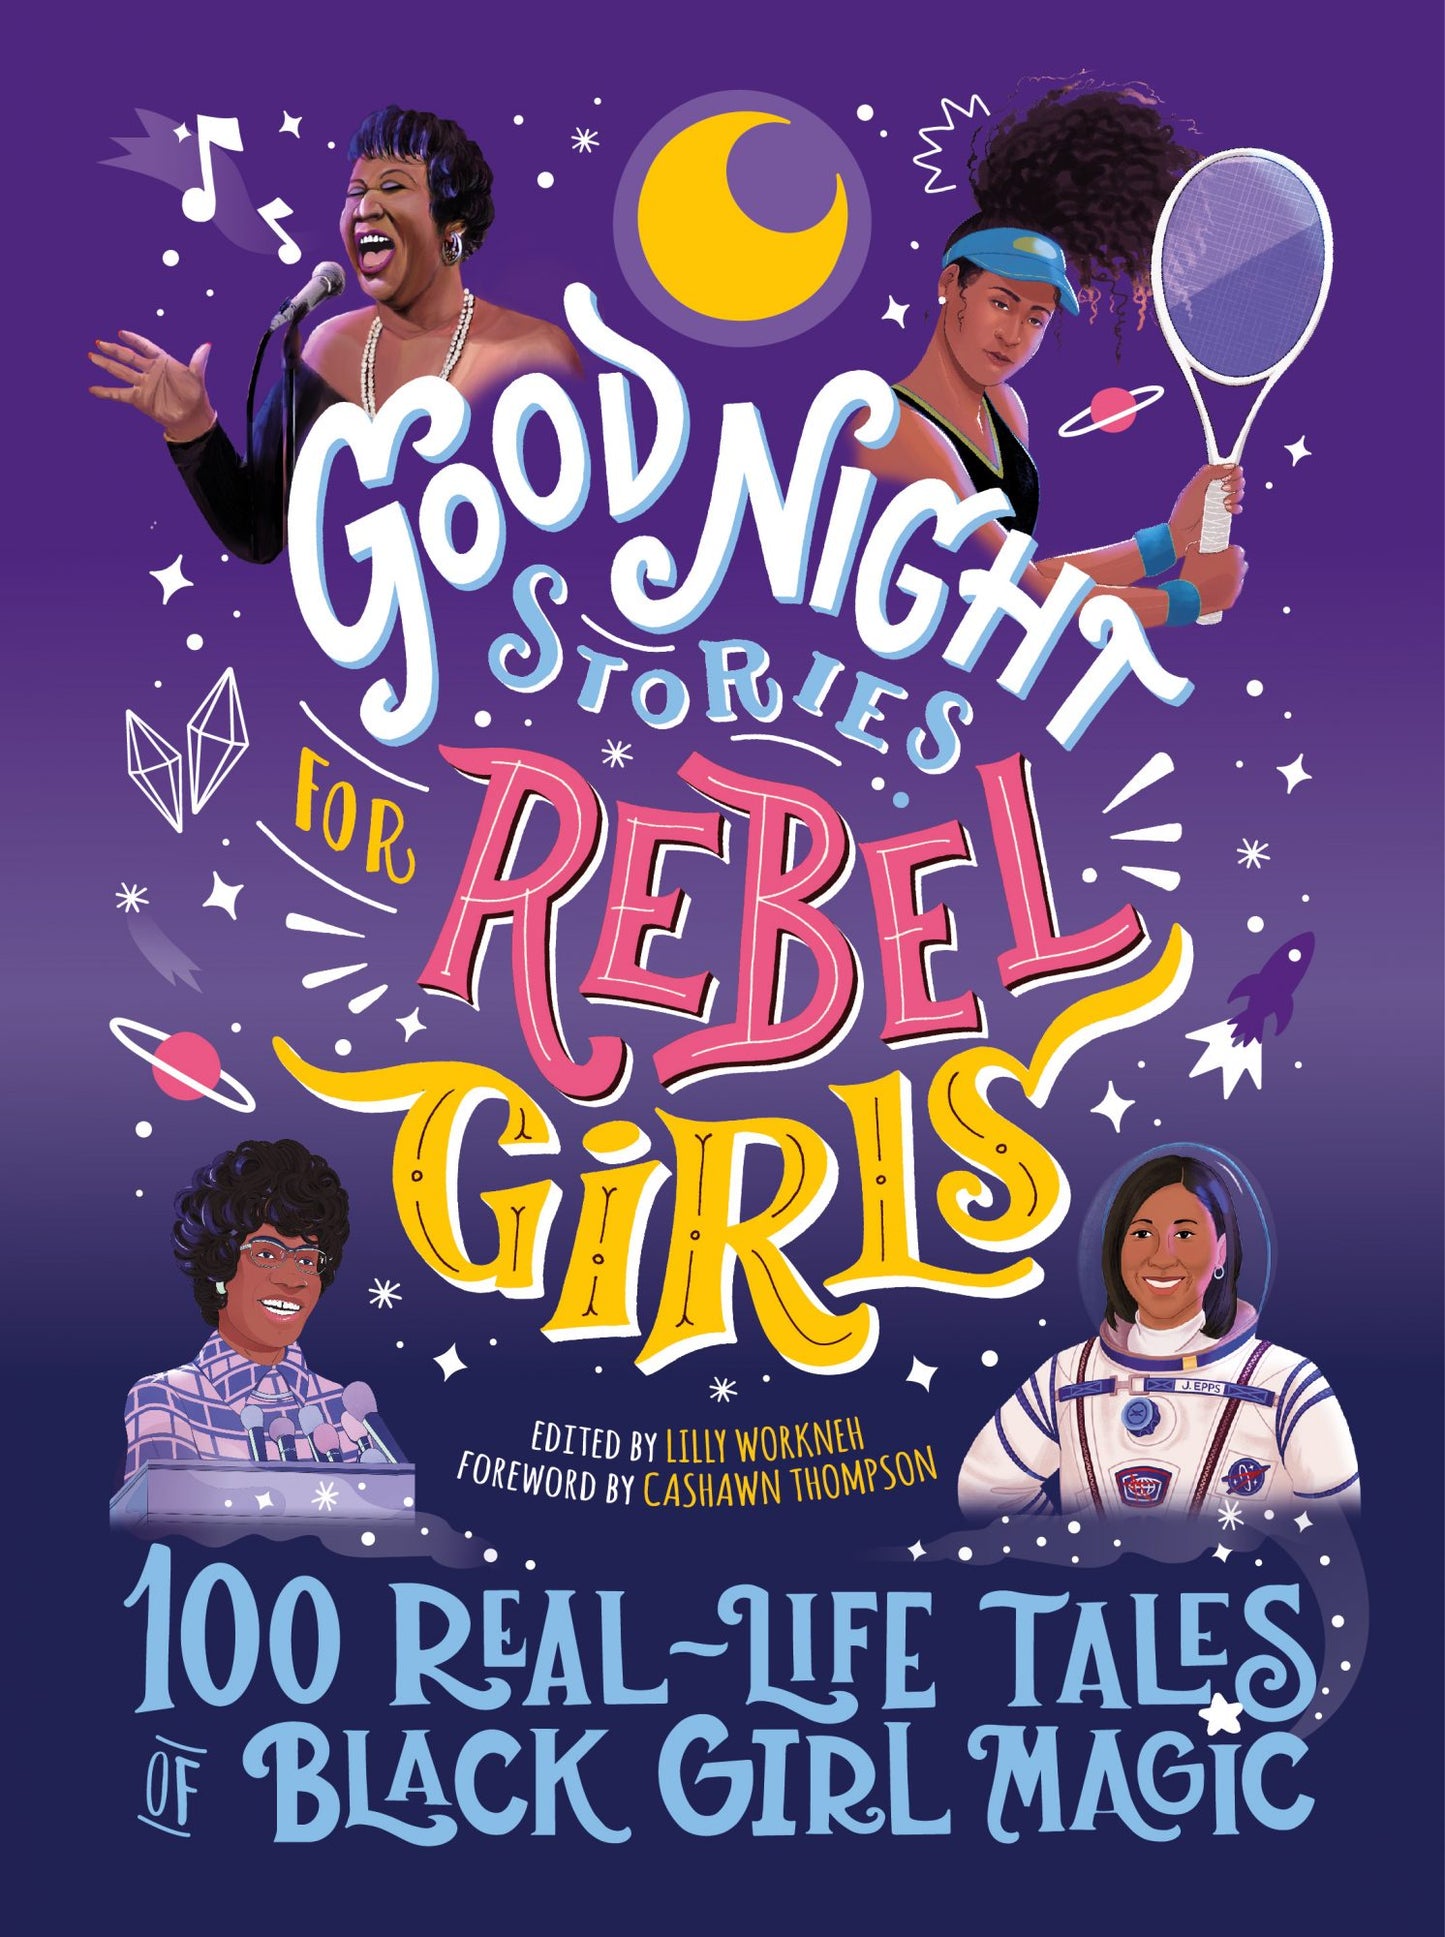 Good Night Stories for Rebel Girls // 100 Real-Life Tales of Black Girl Magic